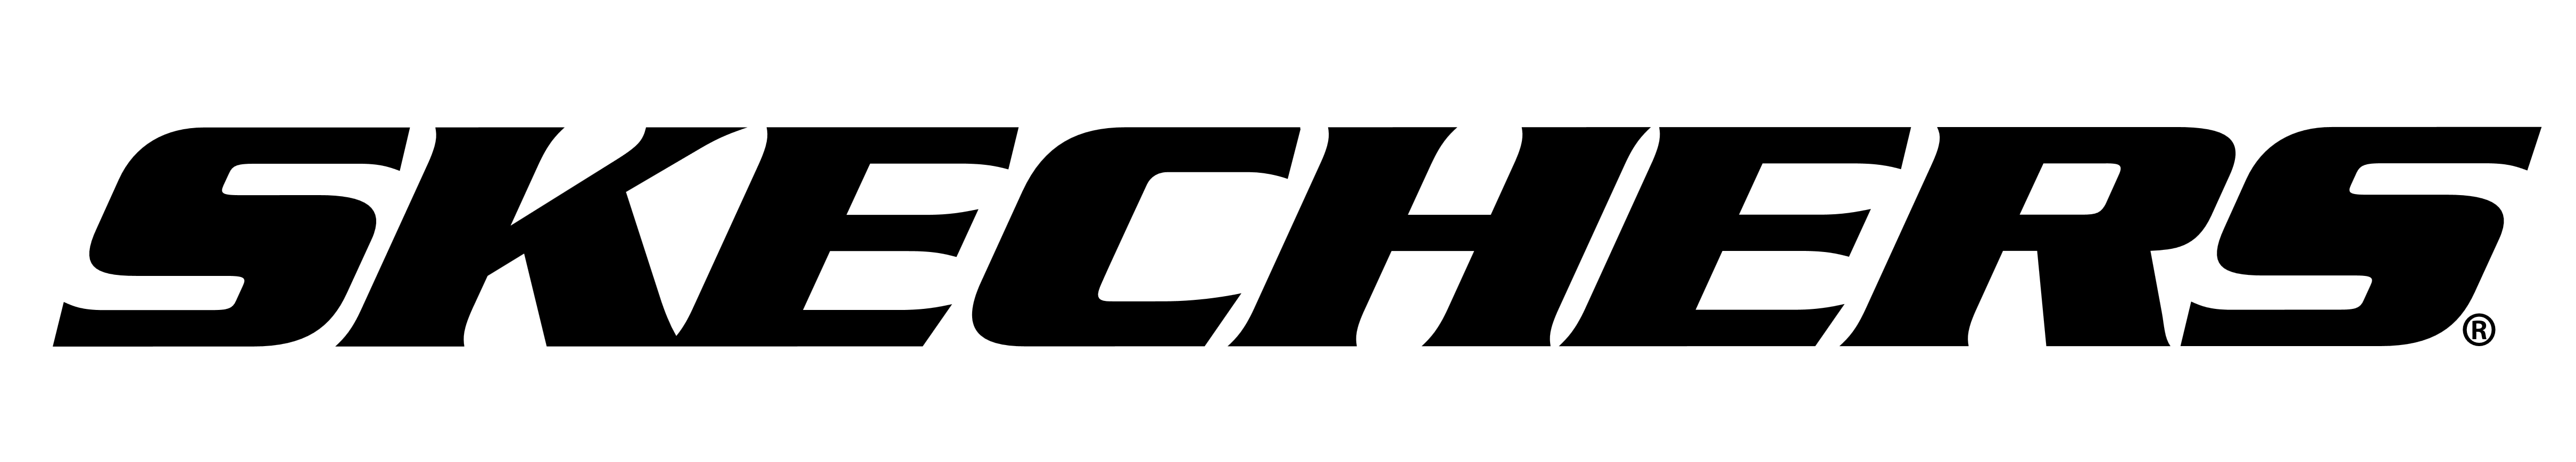 Skechers Logo - Skechers – Logos Download